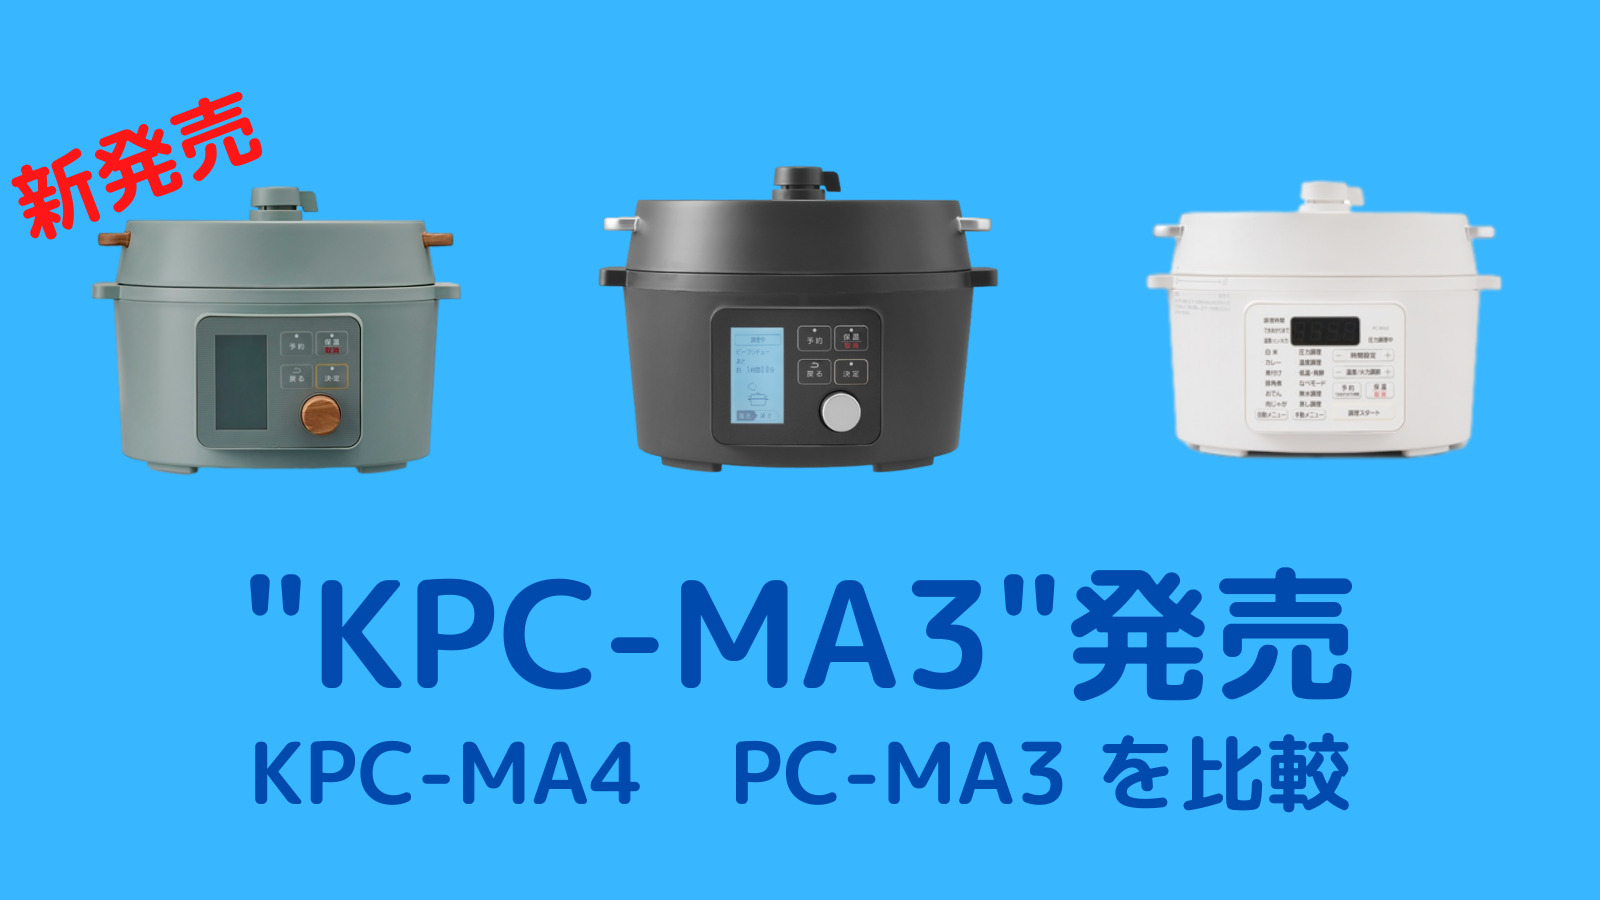 「KPC-MA3」「KPC-MA4」「PC-MA3」比較